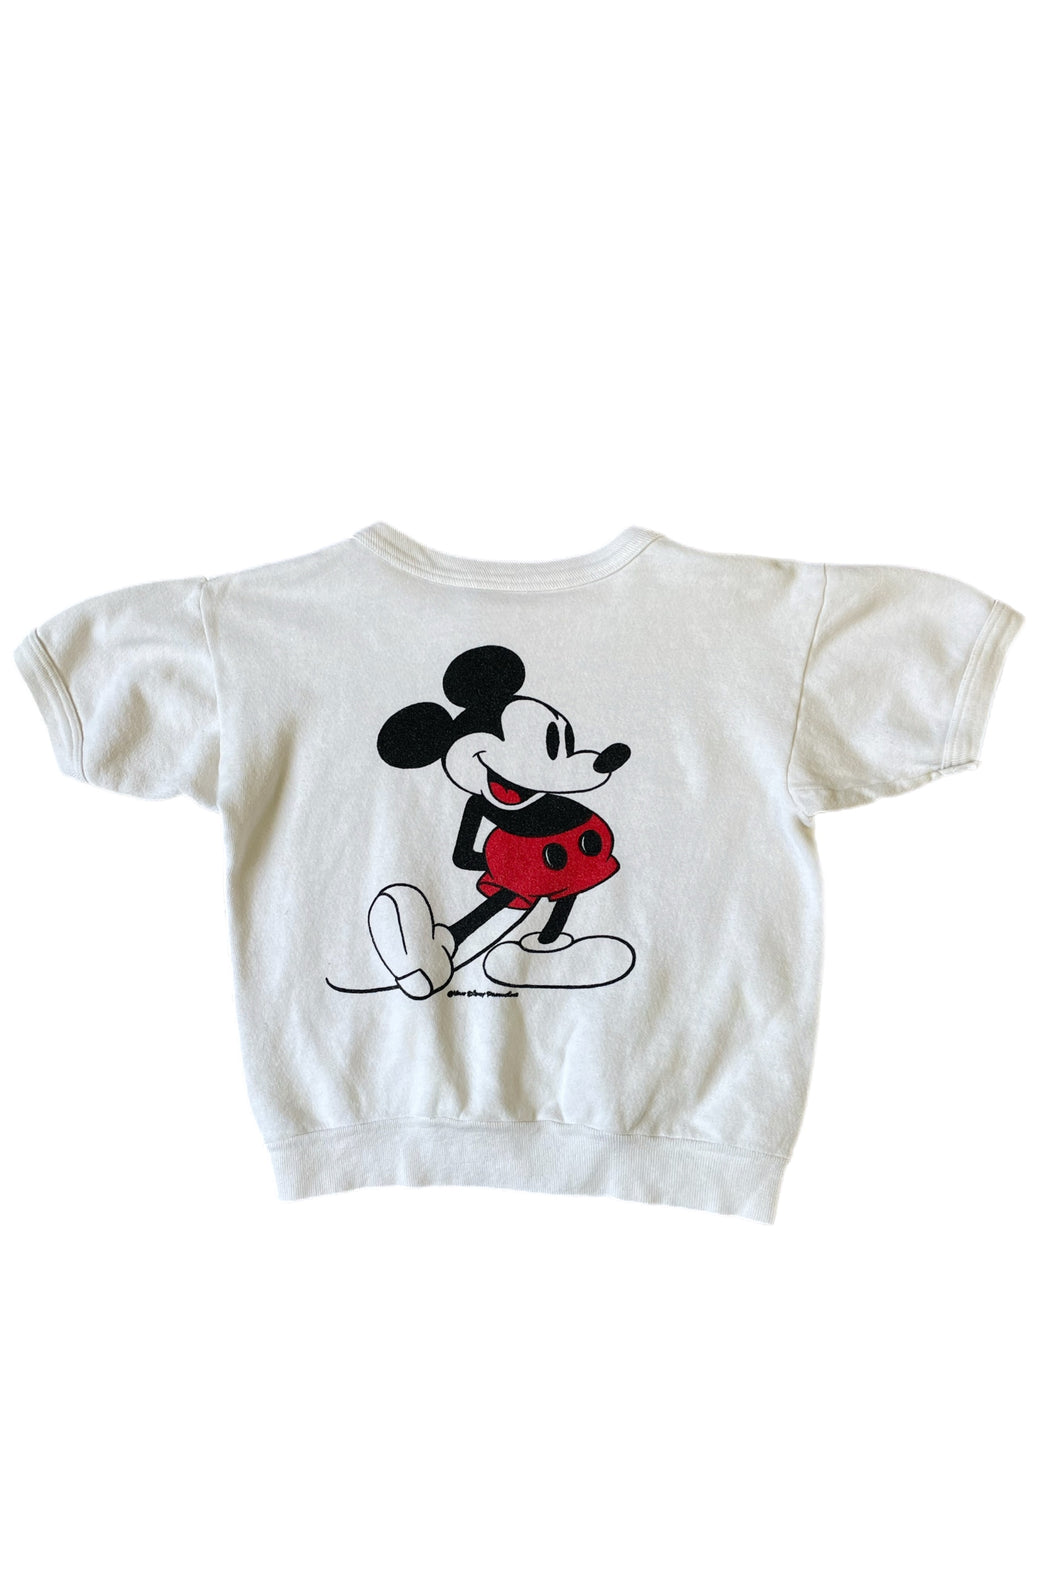 Vintage 1970's Mickey Mouse Petite Sweatshirt